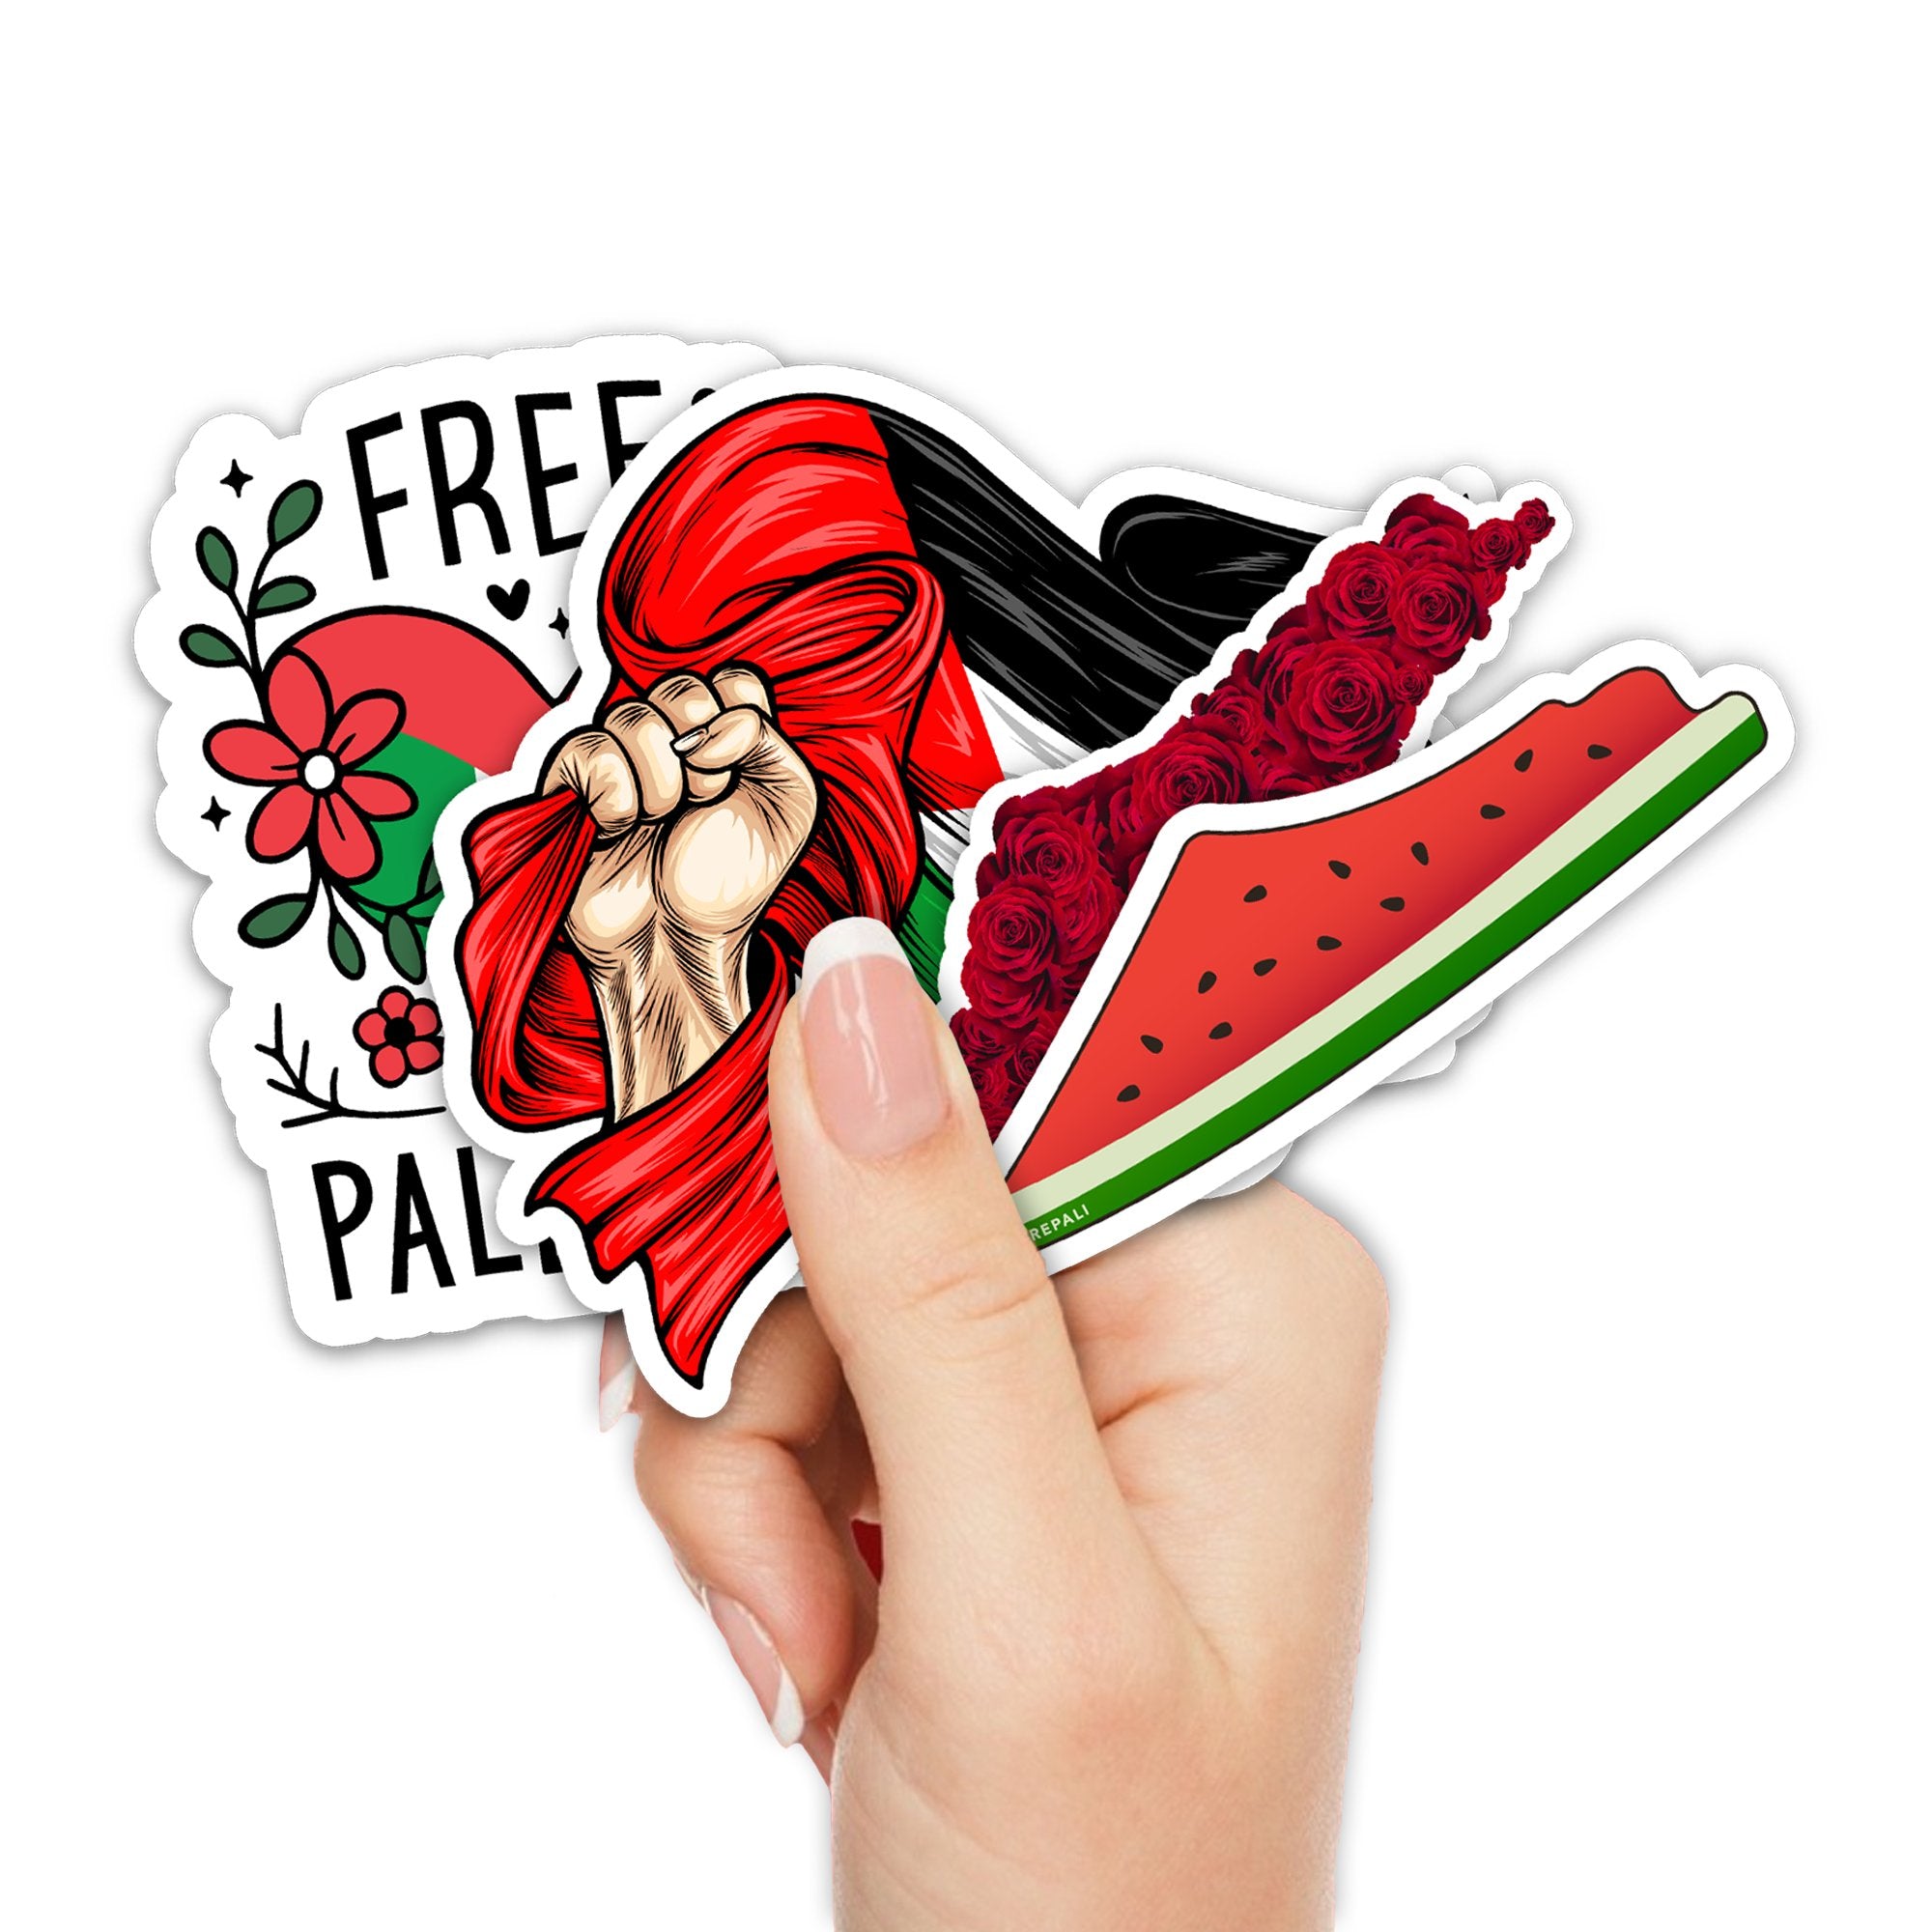 Palestine Stickers by PurePali